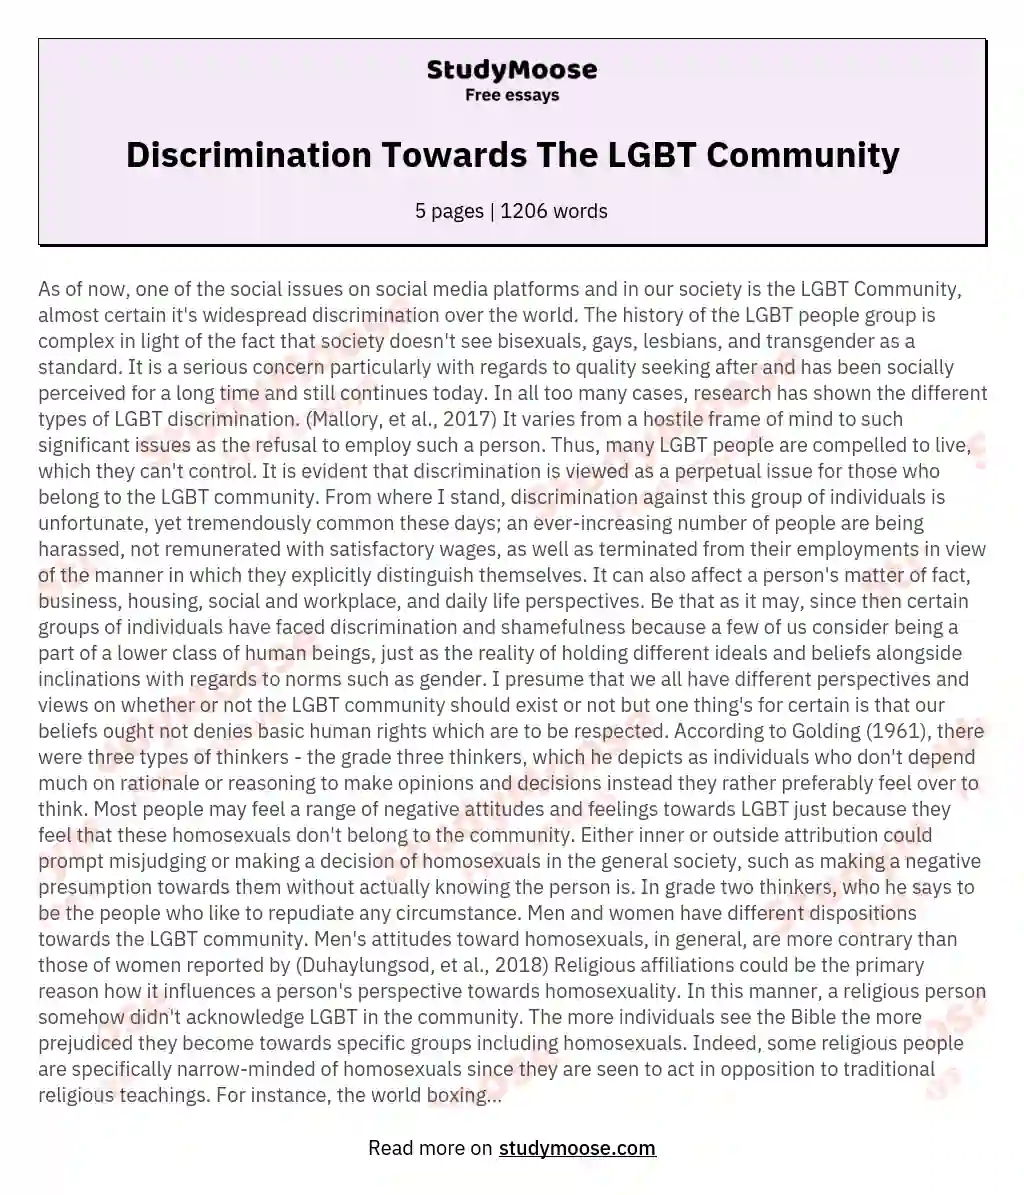 Discrimination Towards The LGBT Community essay